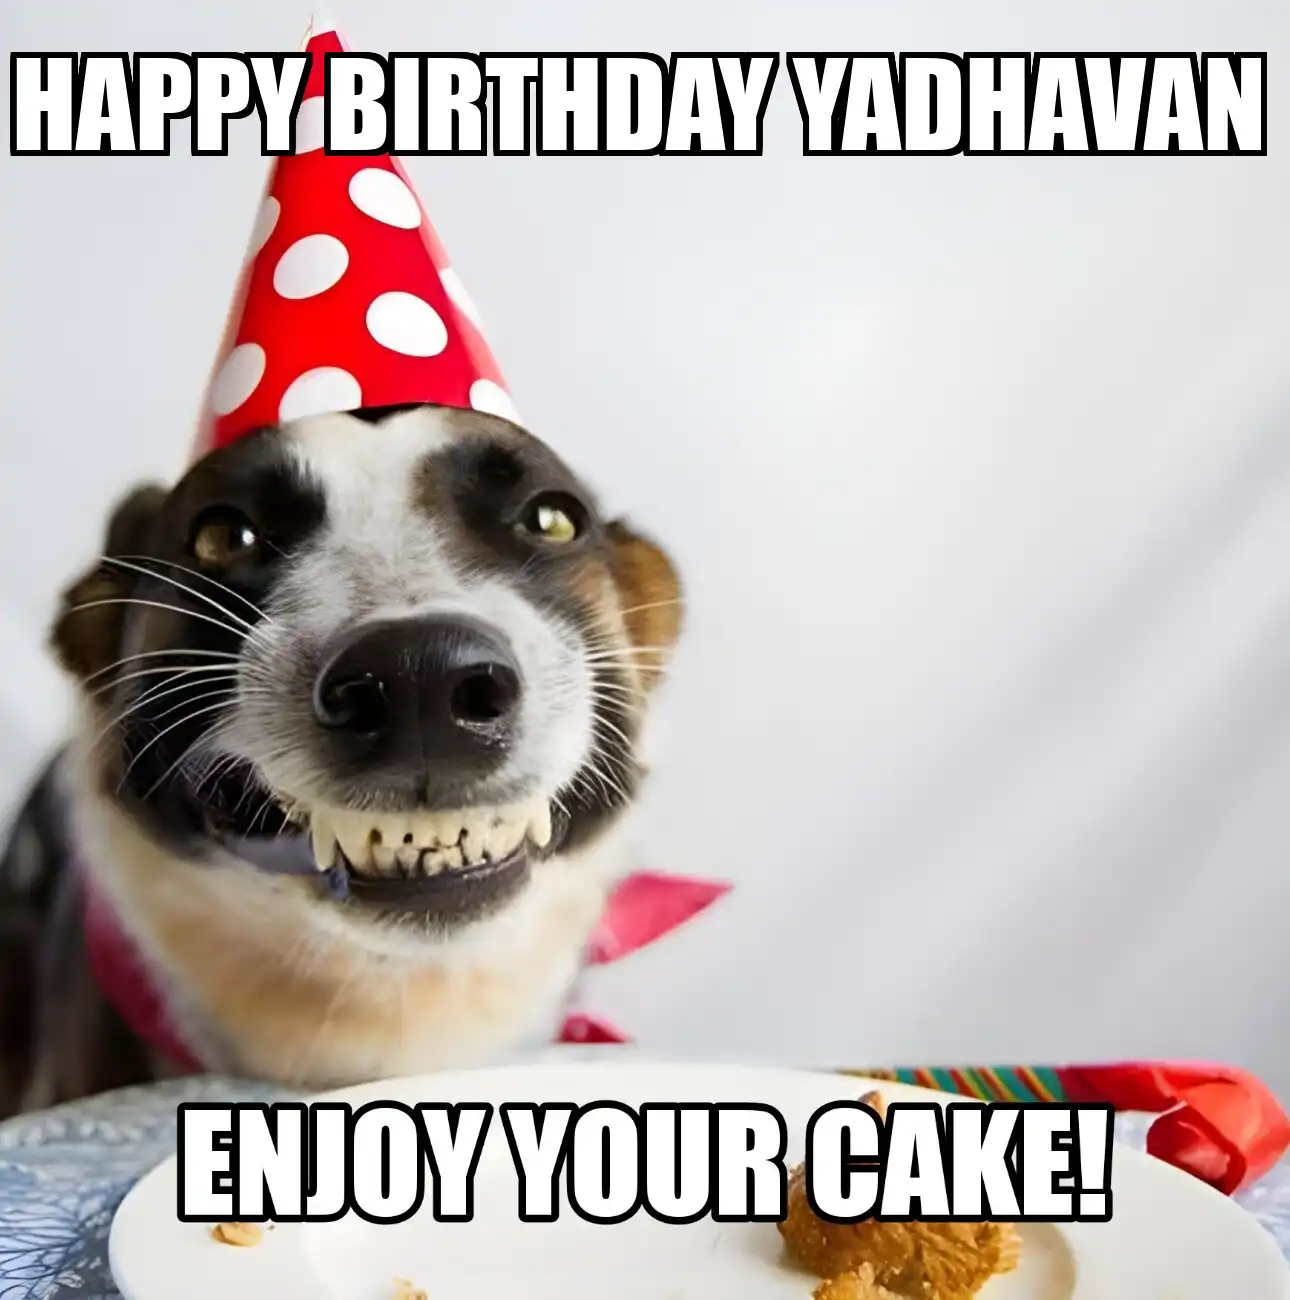 Happy Birthday Yadhavan Enjoy Your Cake Dog Meme